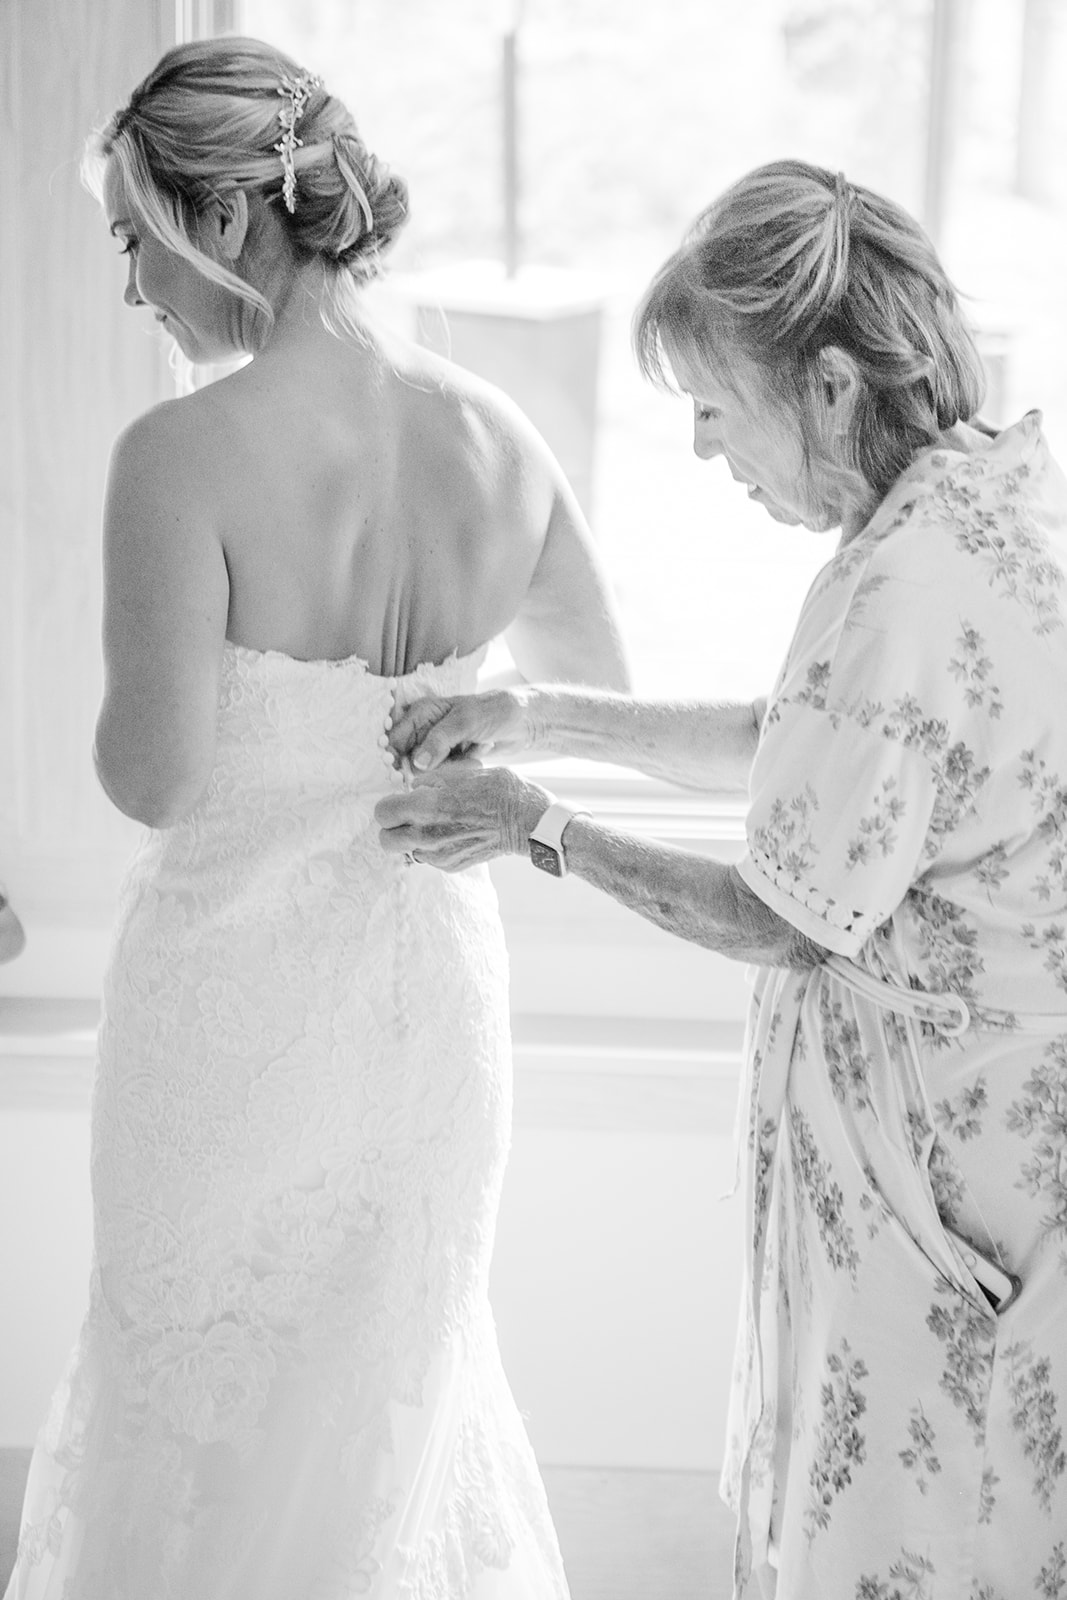 mom zipping up bride in wedding dress